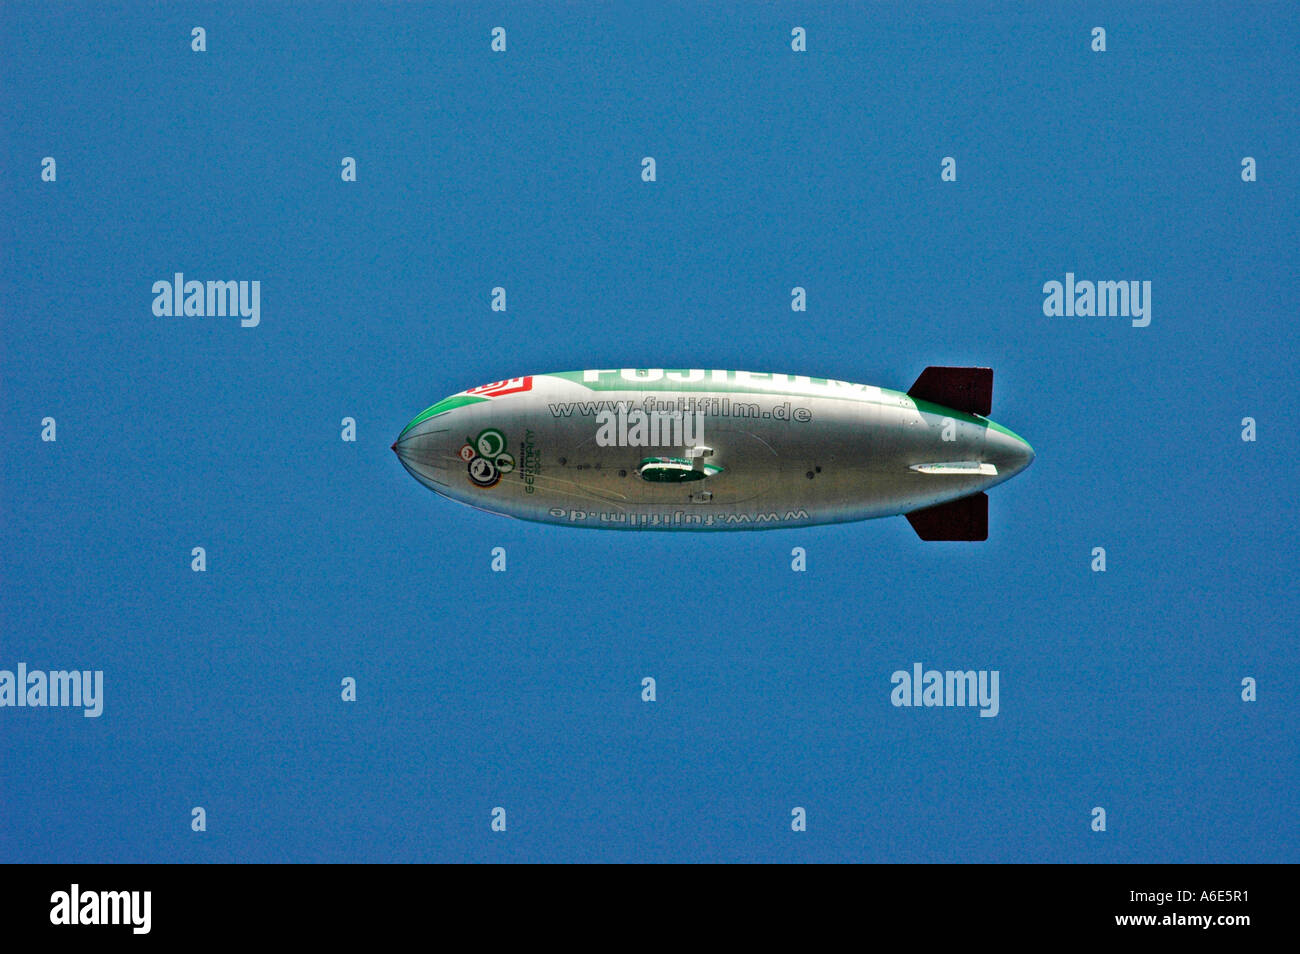 Zeppelin, dirigible, blimp, airship, fuji, fujifilm, flight object, advertisement, advertising, NRW, Nordrhein Westphalia Stock Photo